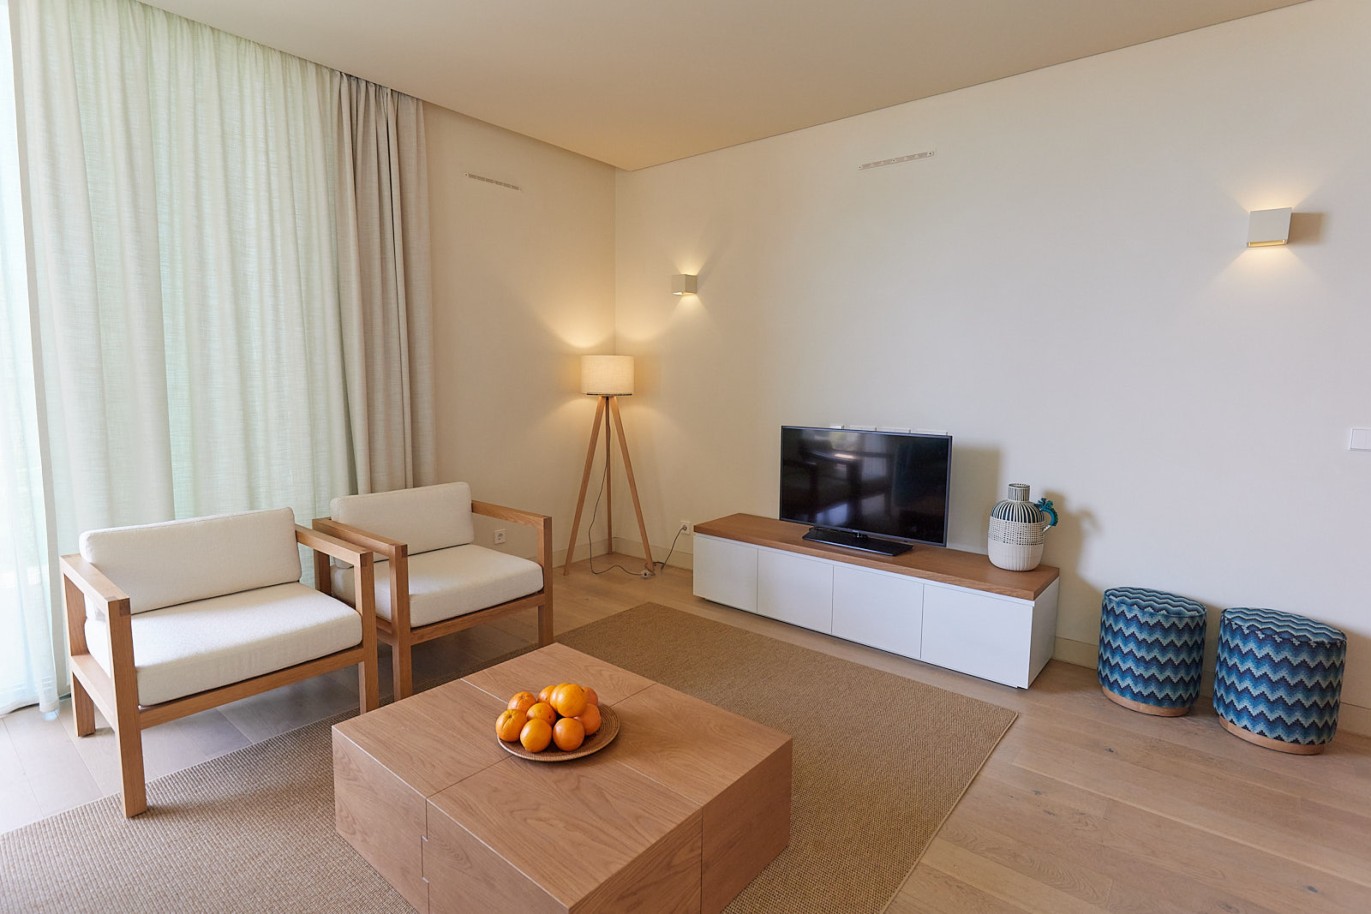 2 bedroom apartment in resort, for sale in Porches, Algarve_228895